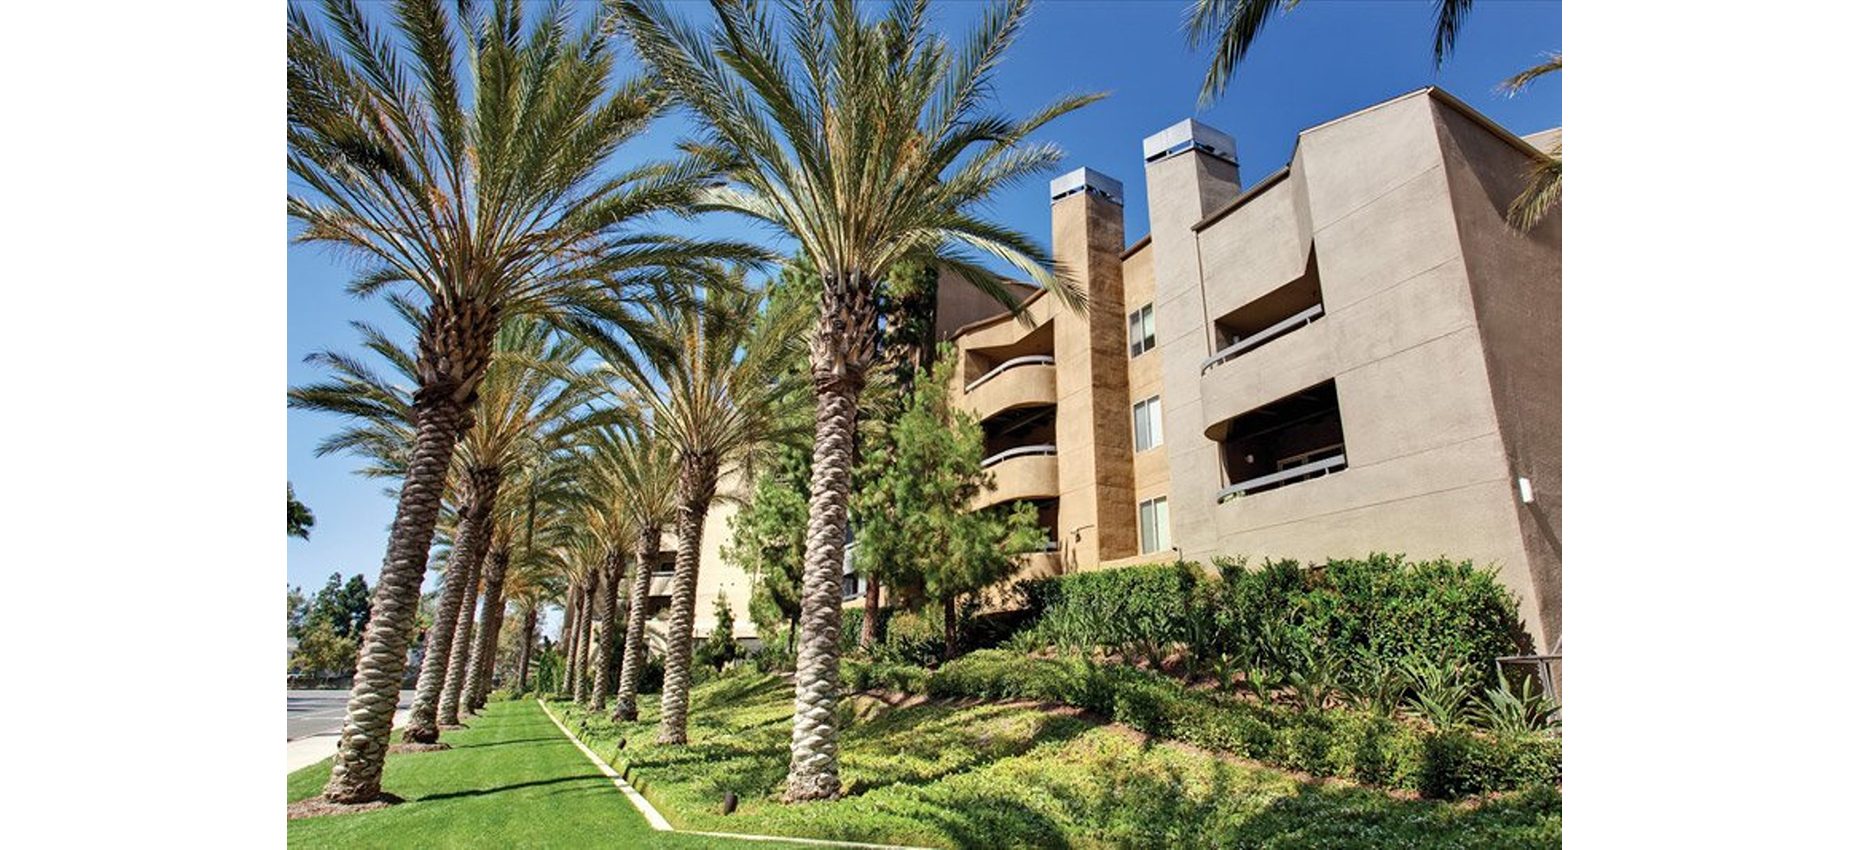 3400 Avenue of the Arts - Apartments in Costa Mesa, CA - Home